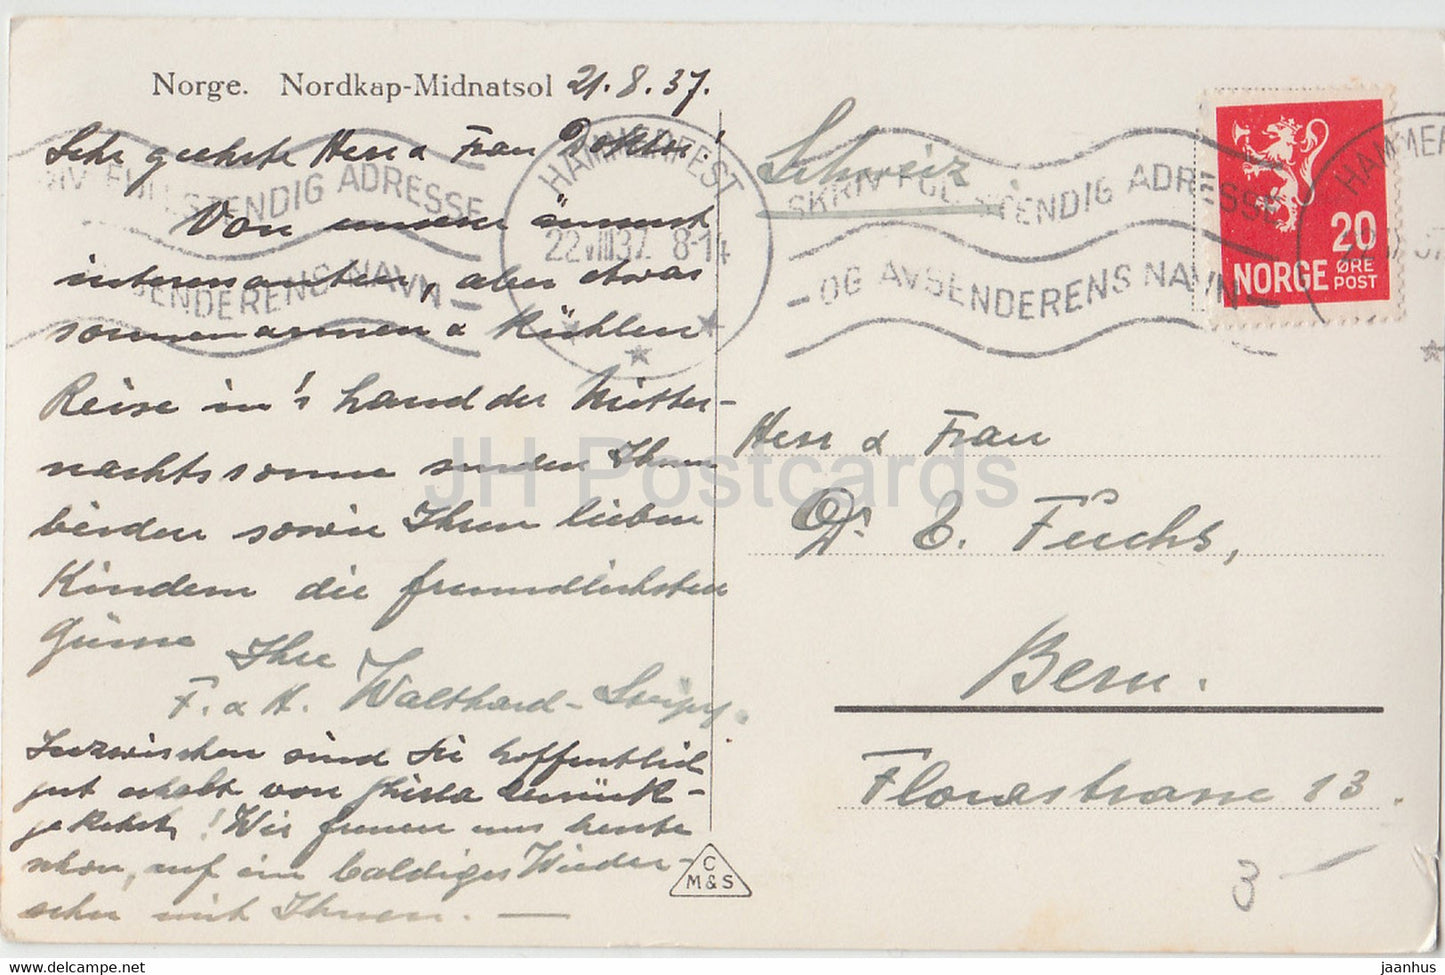 Nordkap - Midnatsol - 136 - carte postale ancienne - 1937 - Norvège - utilisé